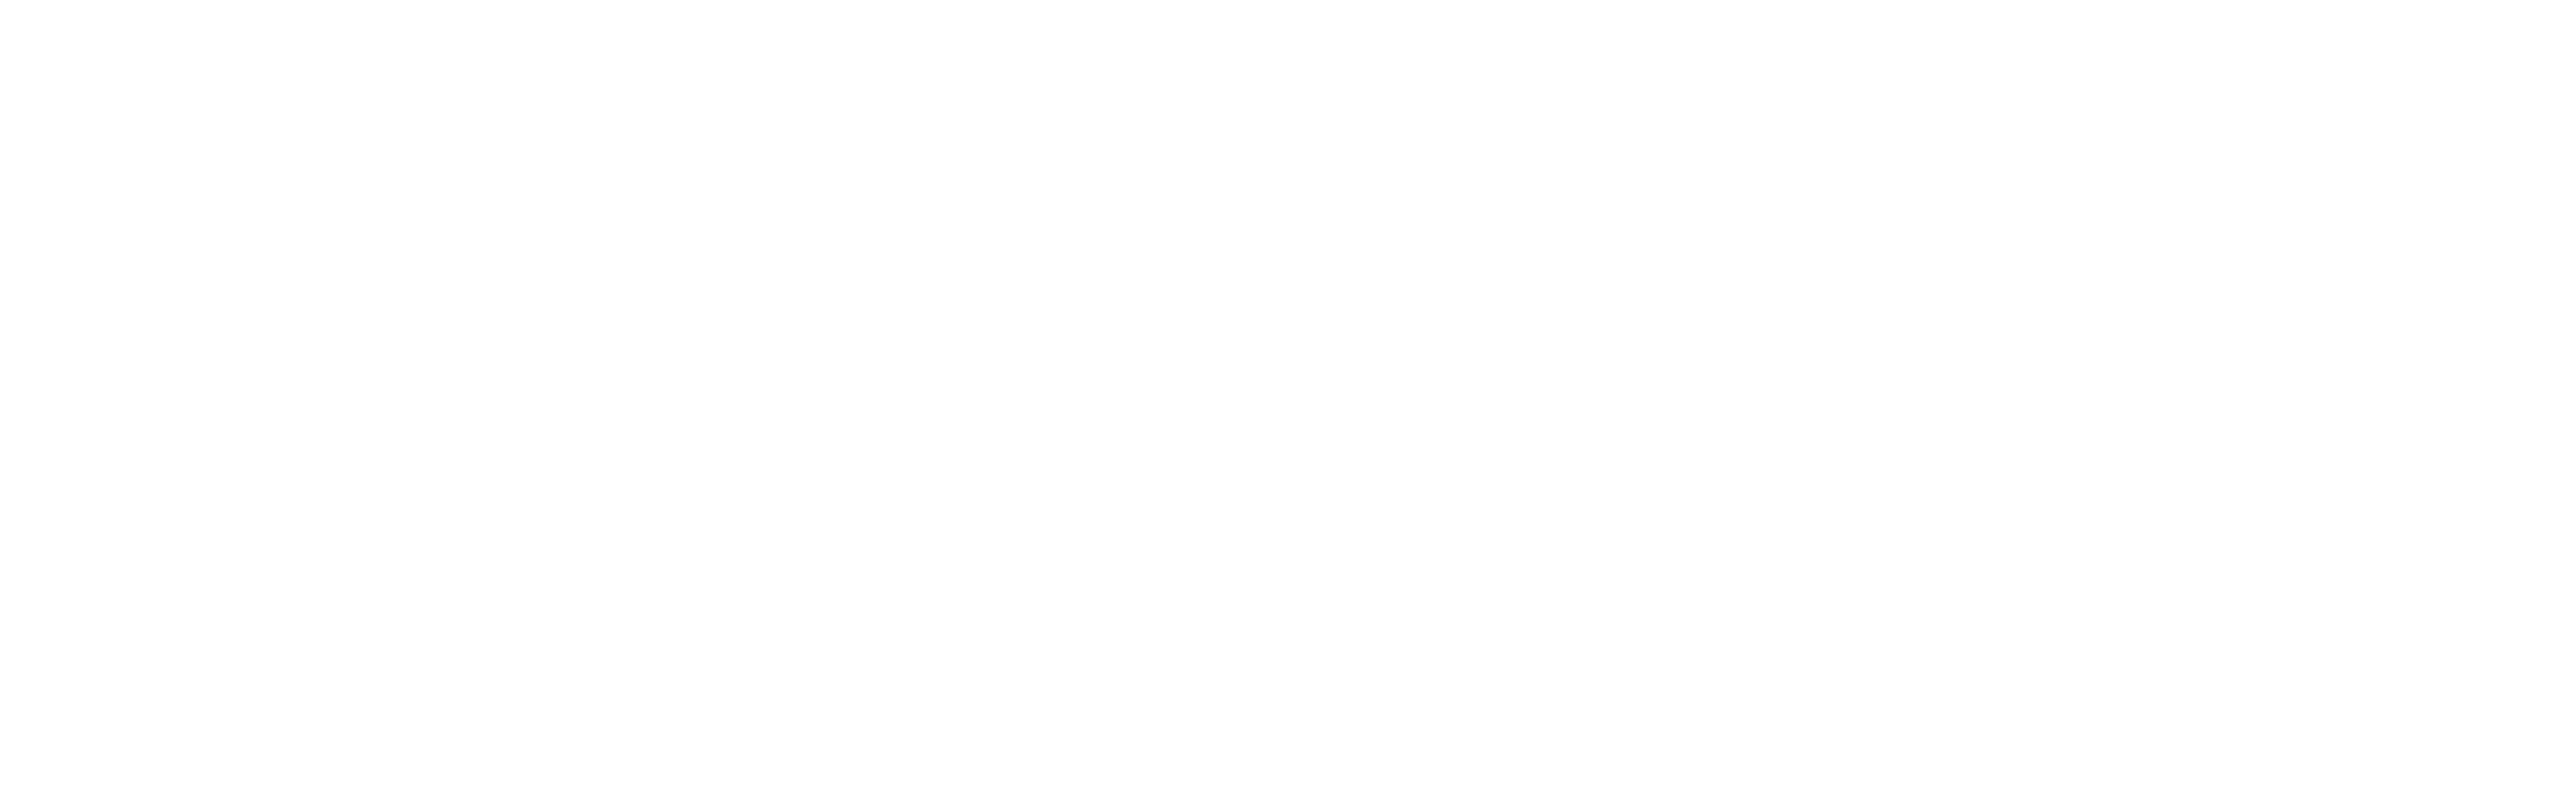 Automotive Tech Summit > logo > Dassault Système®